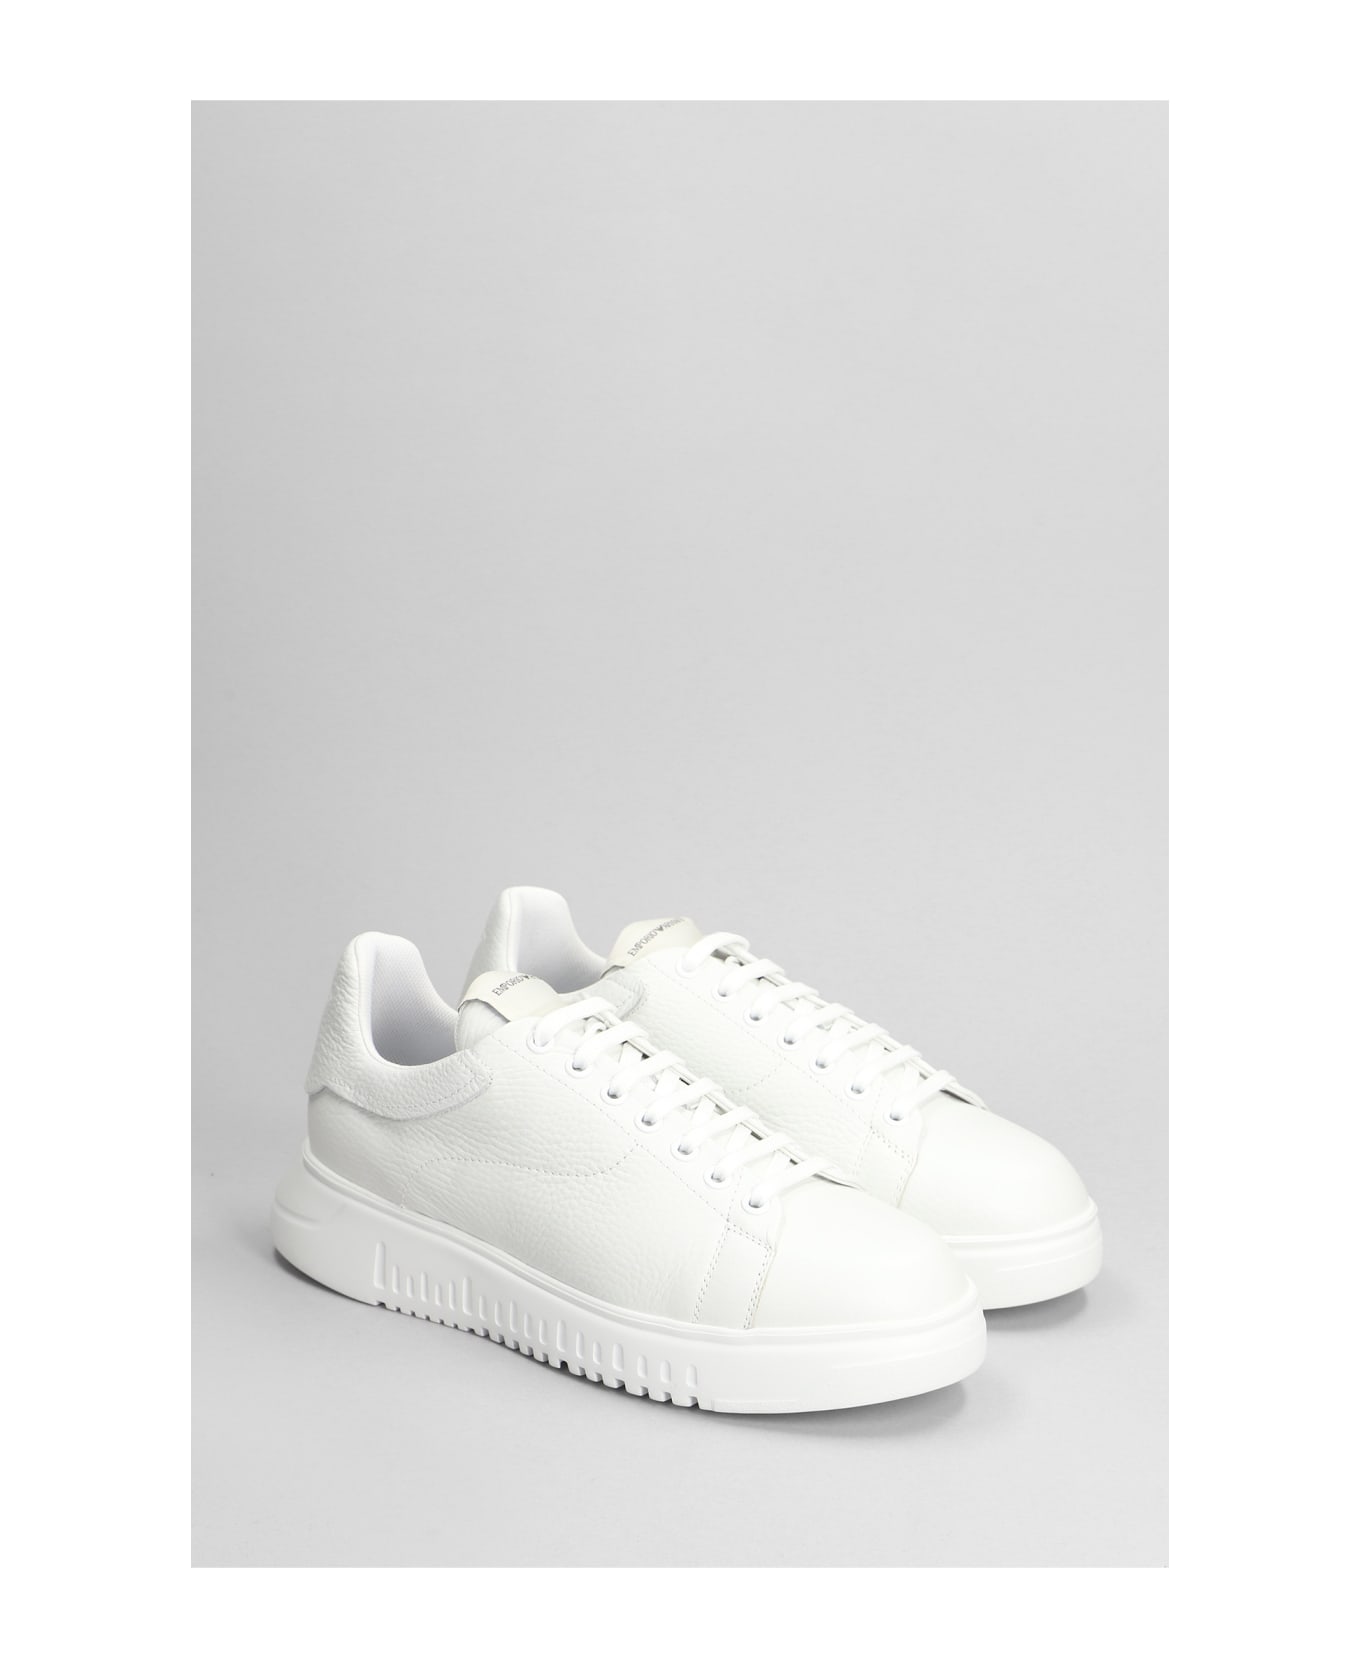 Emporio Armani Leather Sneakers - Bianco